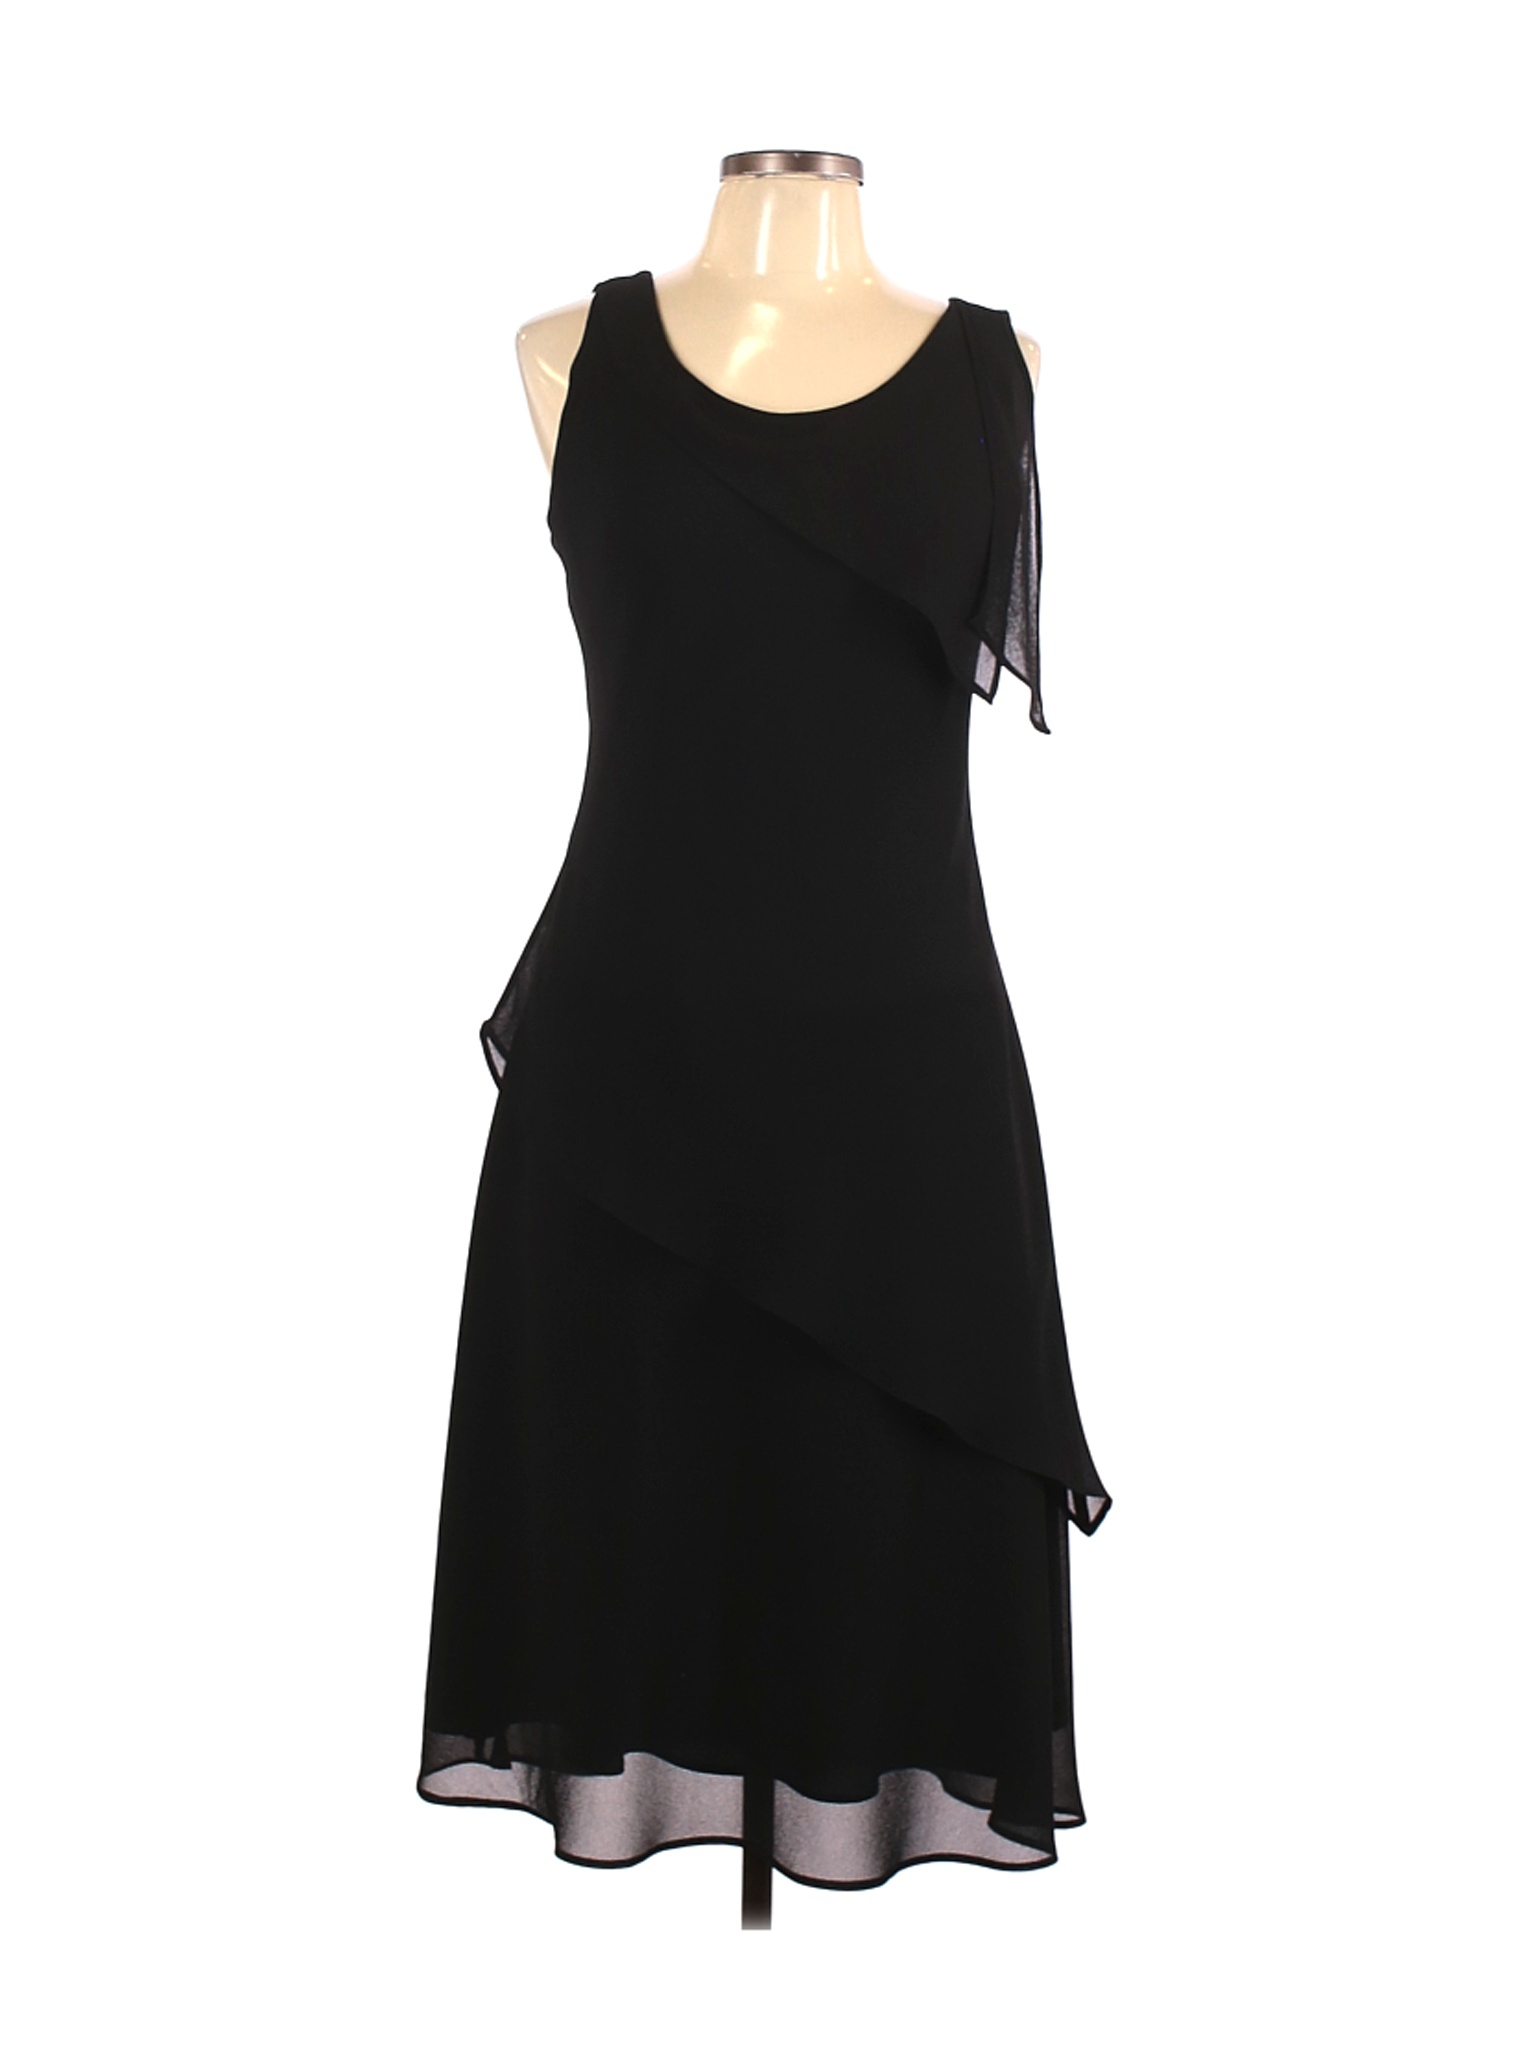 Ultra Dress Women Black Cocktail Dress 12 | eBay